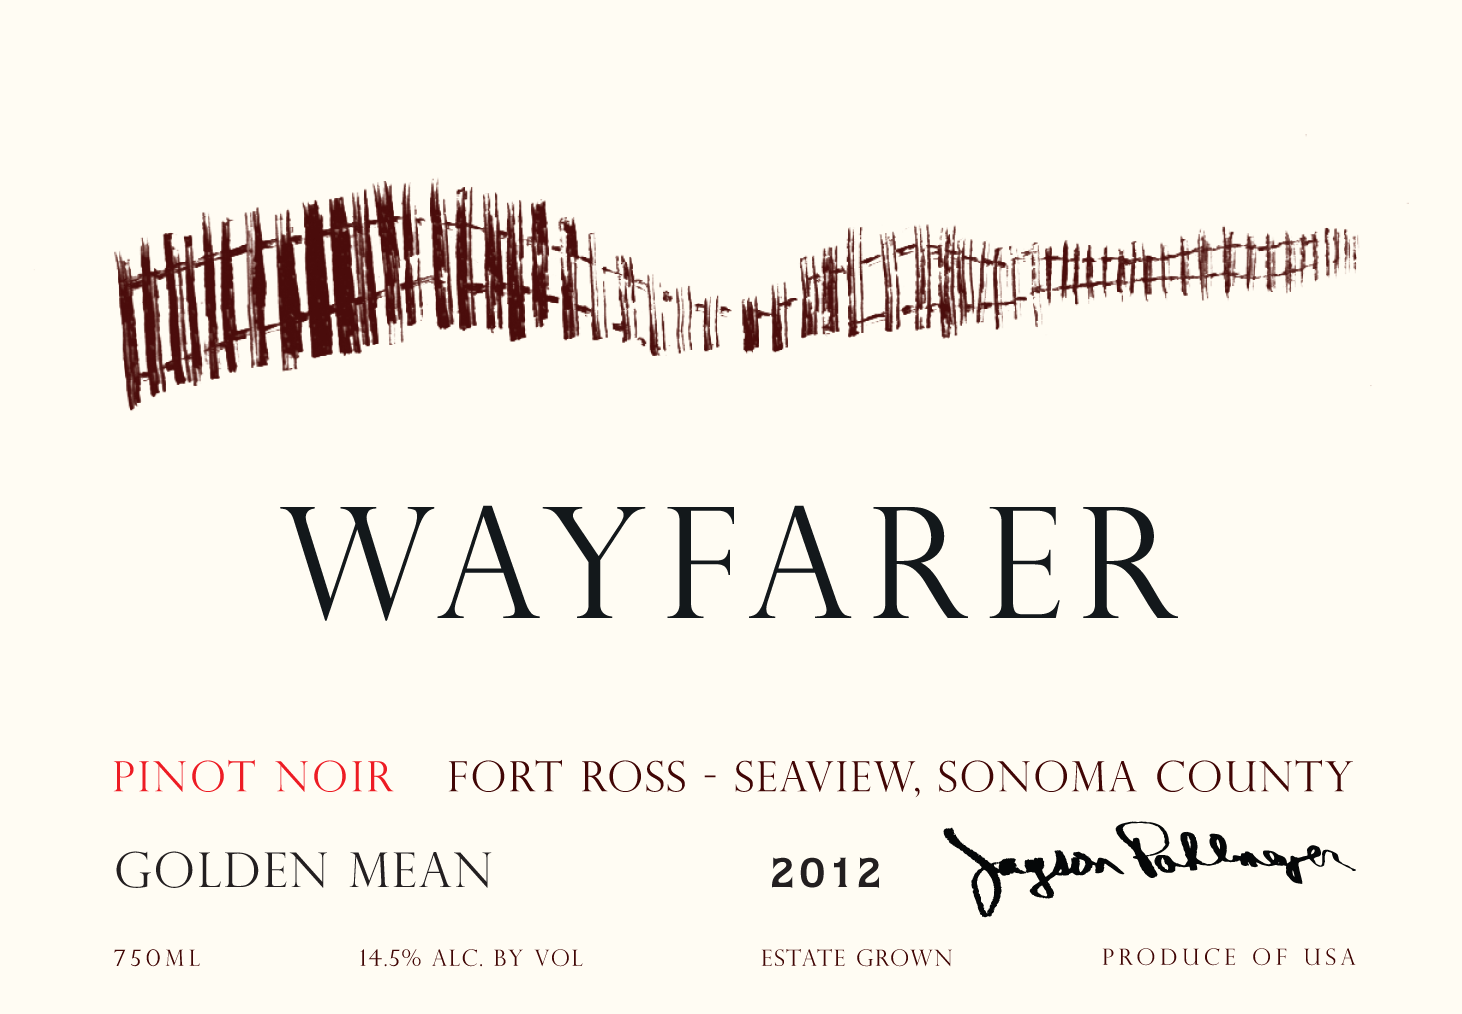 2013 Wayfarer Pinot Noir Mother Rock Fort Ross-Seaview Sonoma image